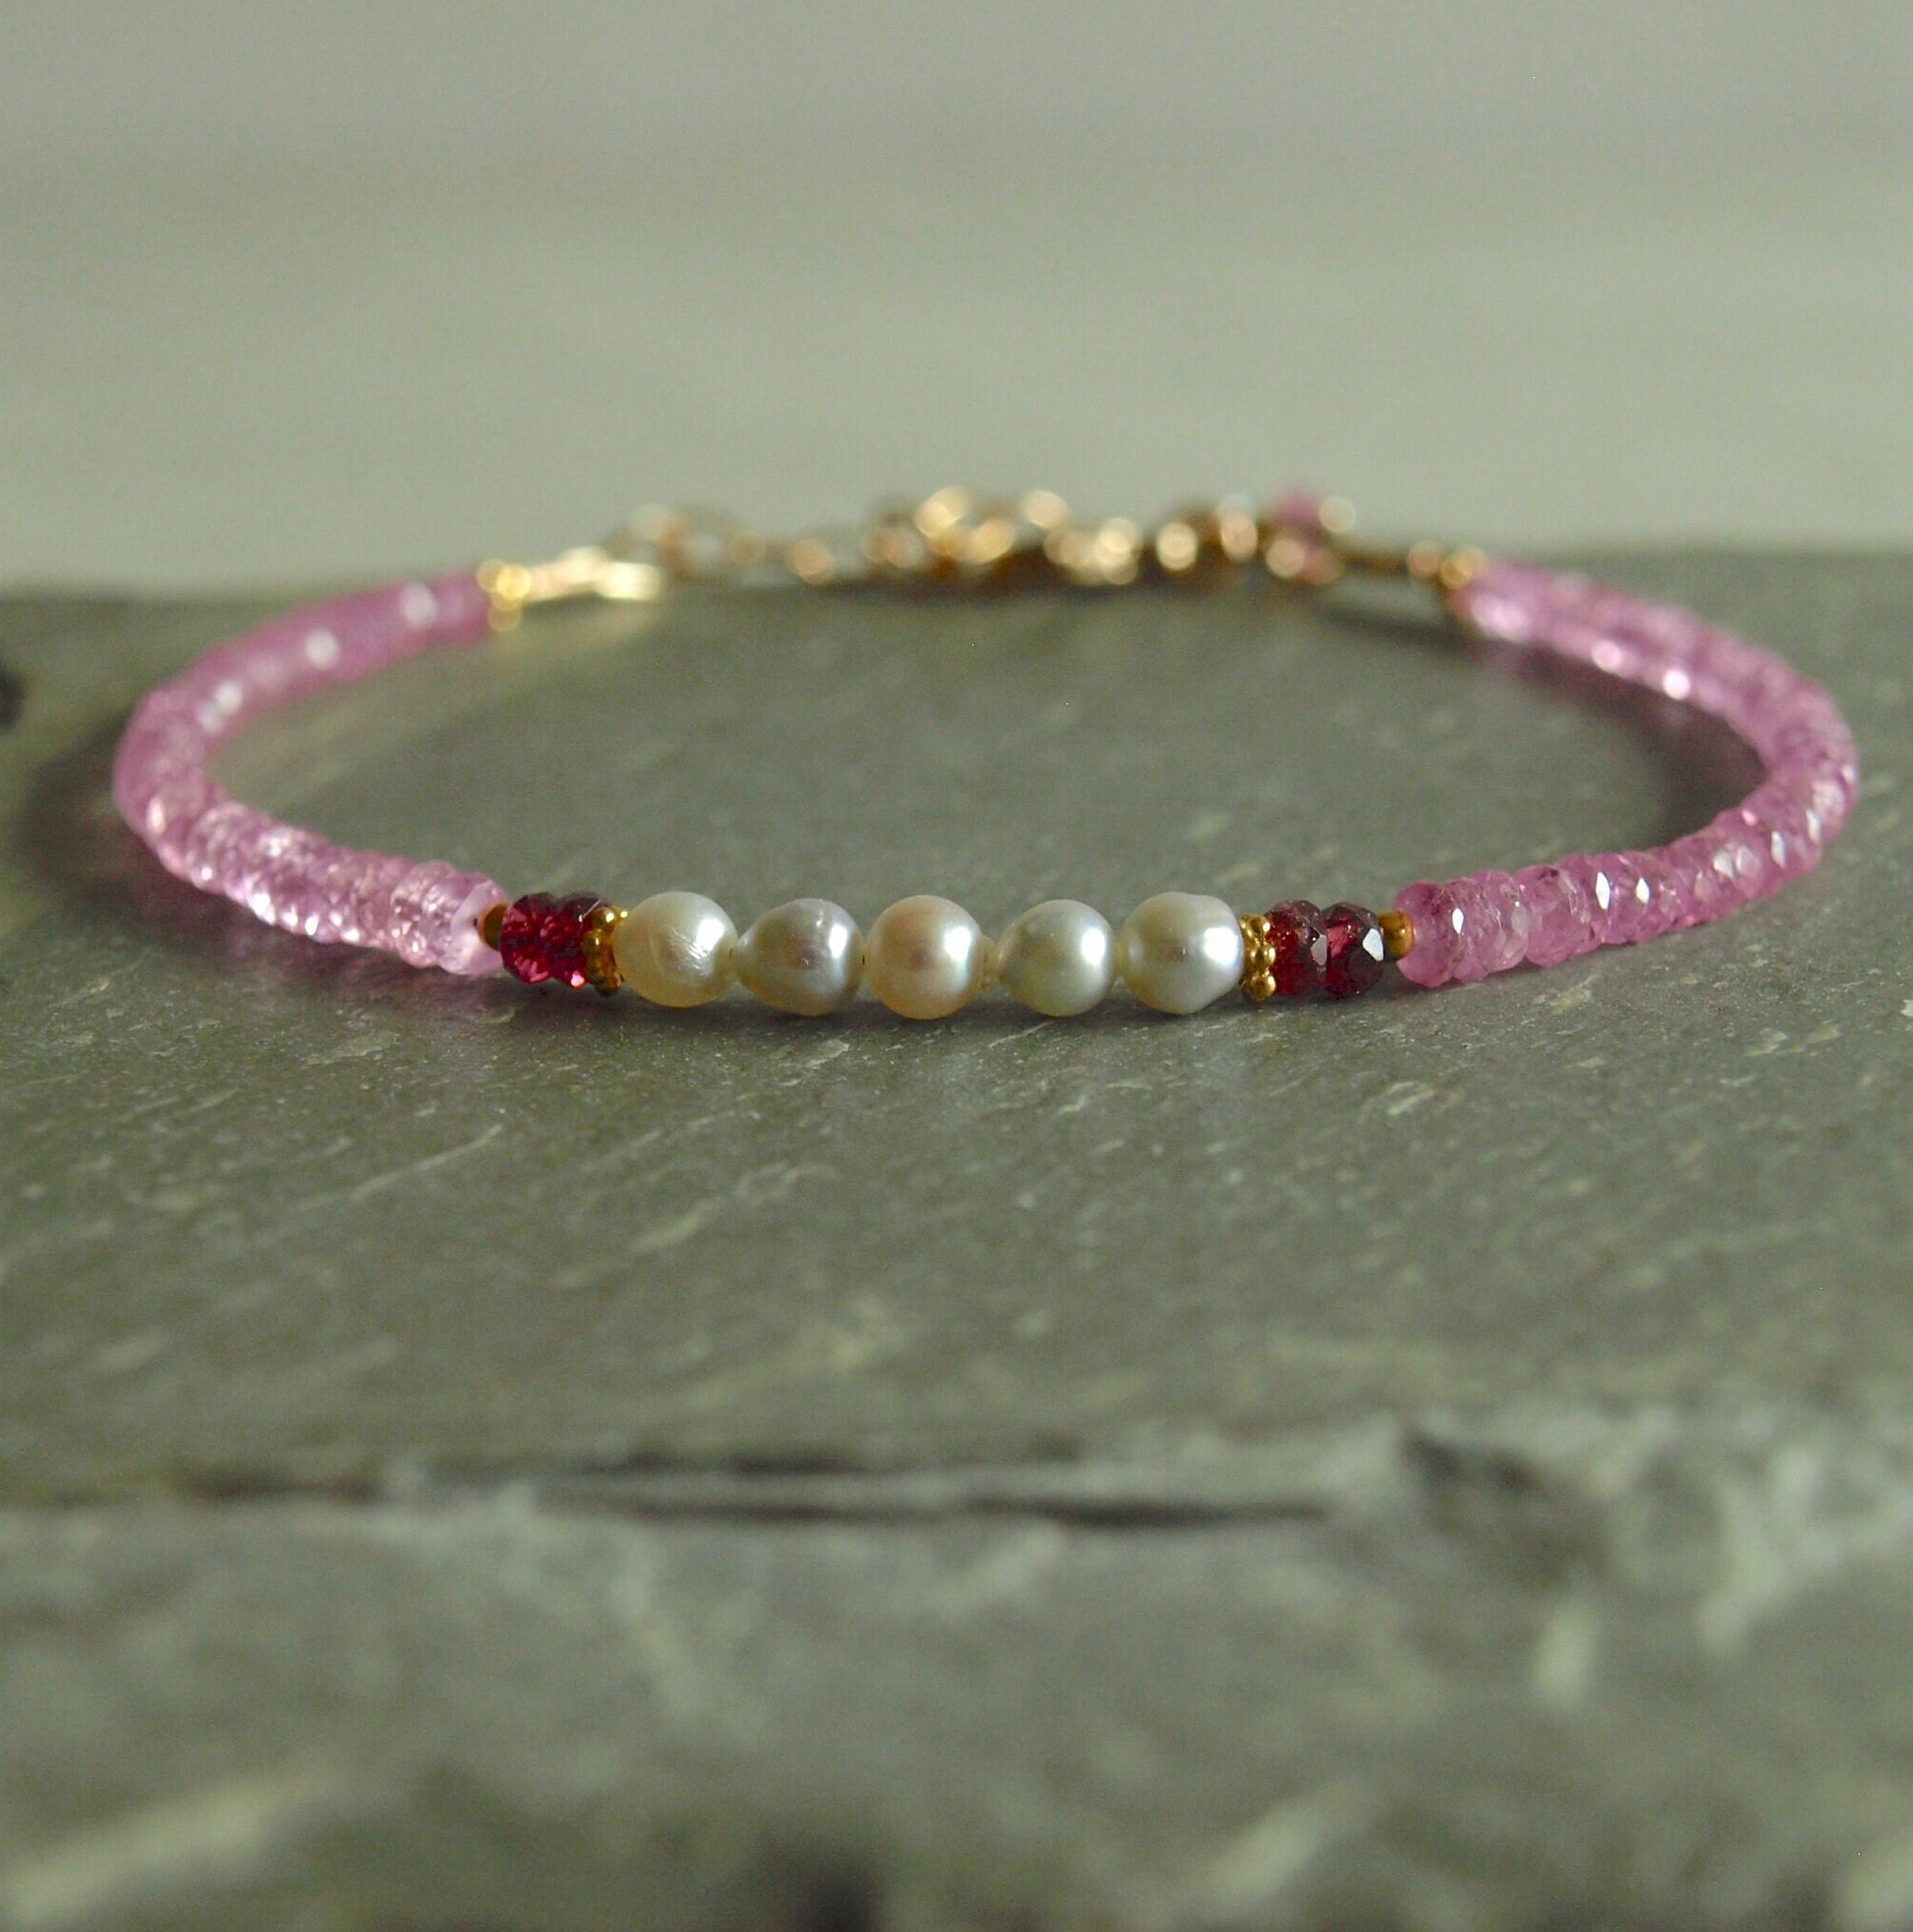 Gemstone Fade Chain Bracelet